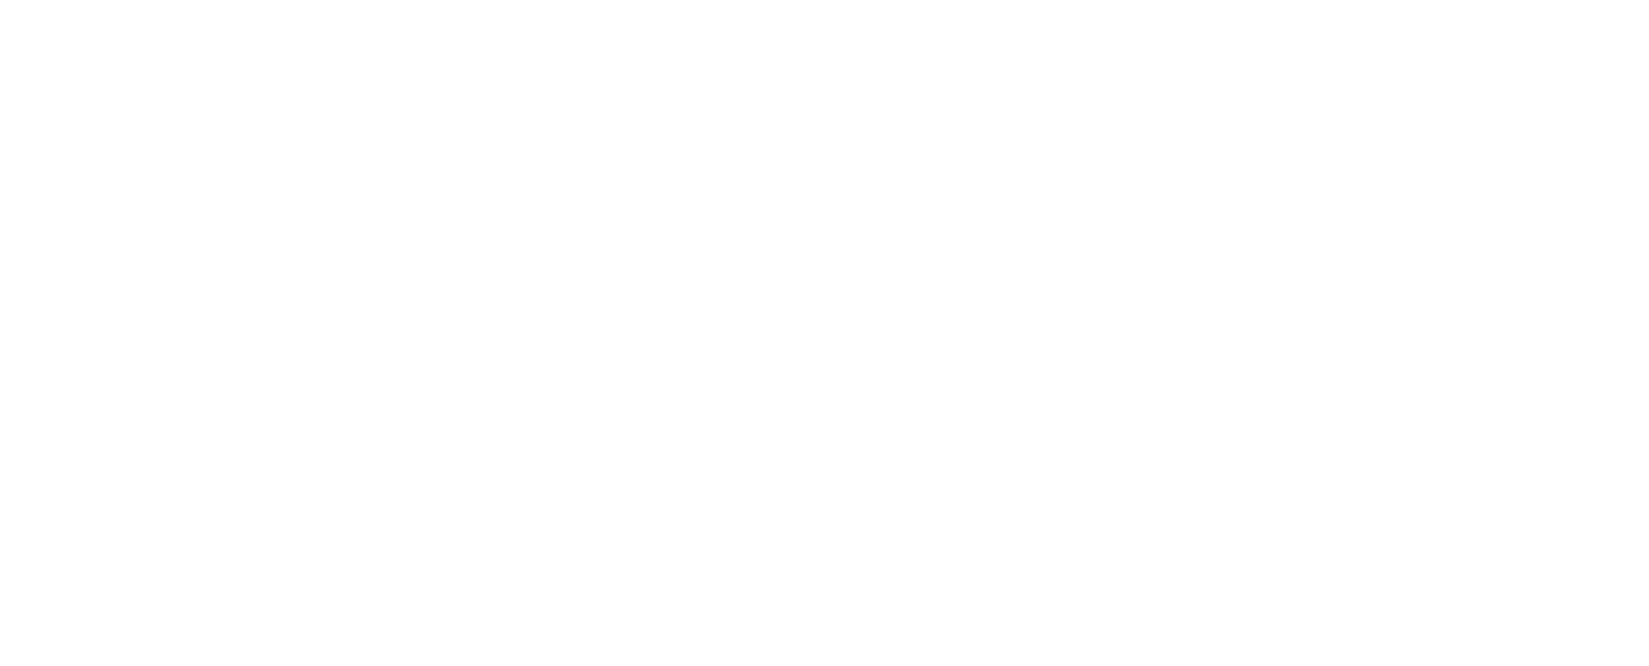 Royalty Pharma logo for dark backgrounds (transparent PNG)